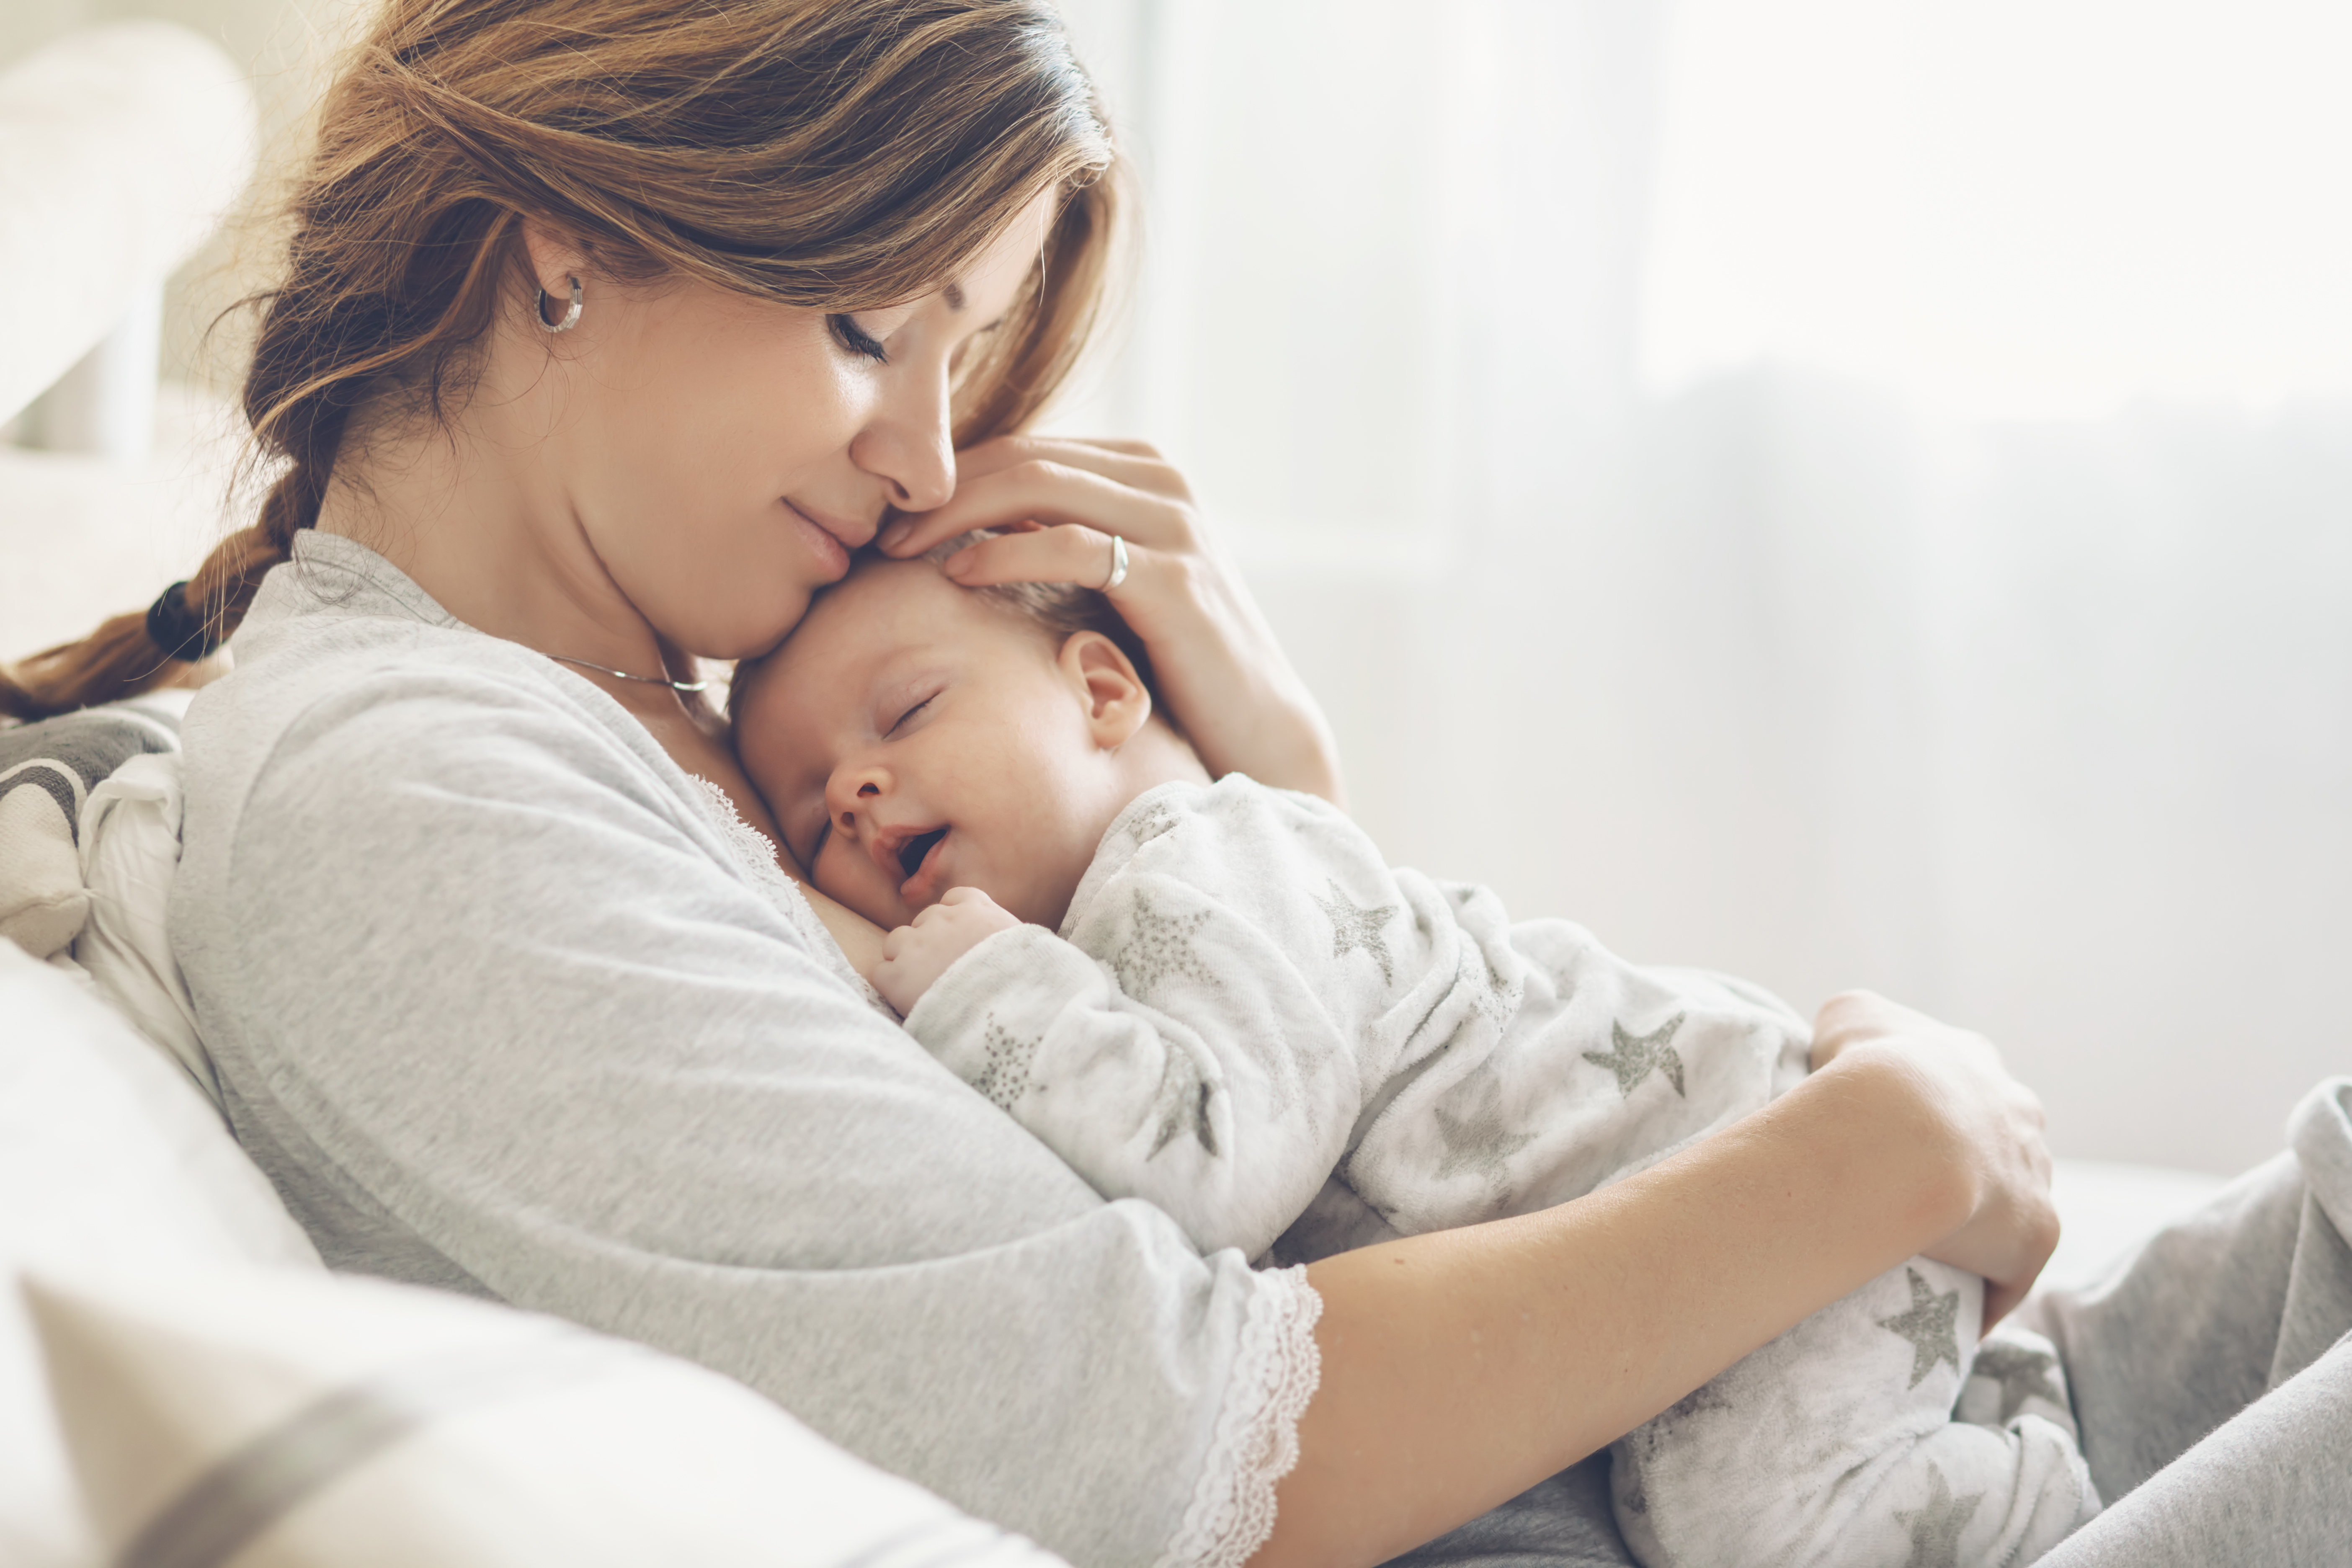 A mother cuddling her newborn child | Source: Shutterstock